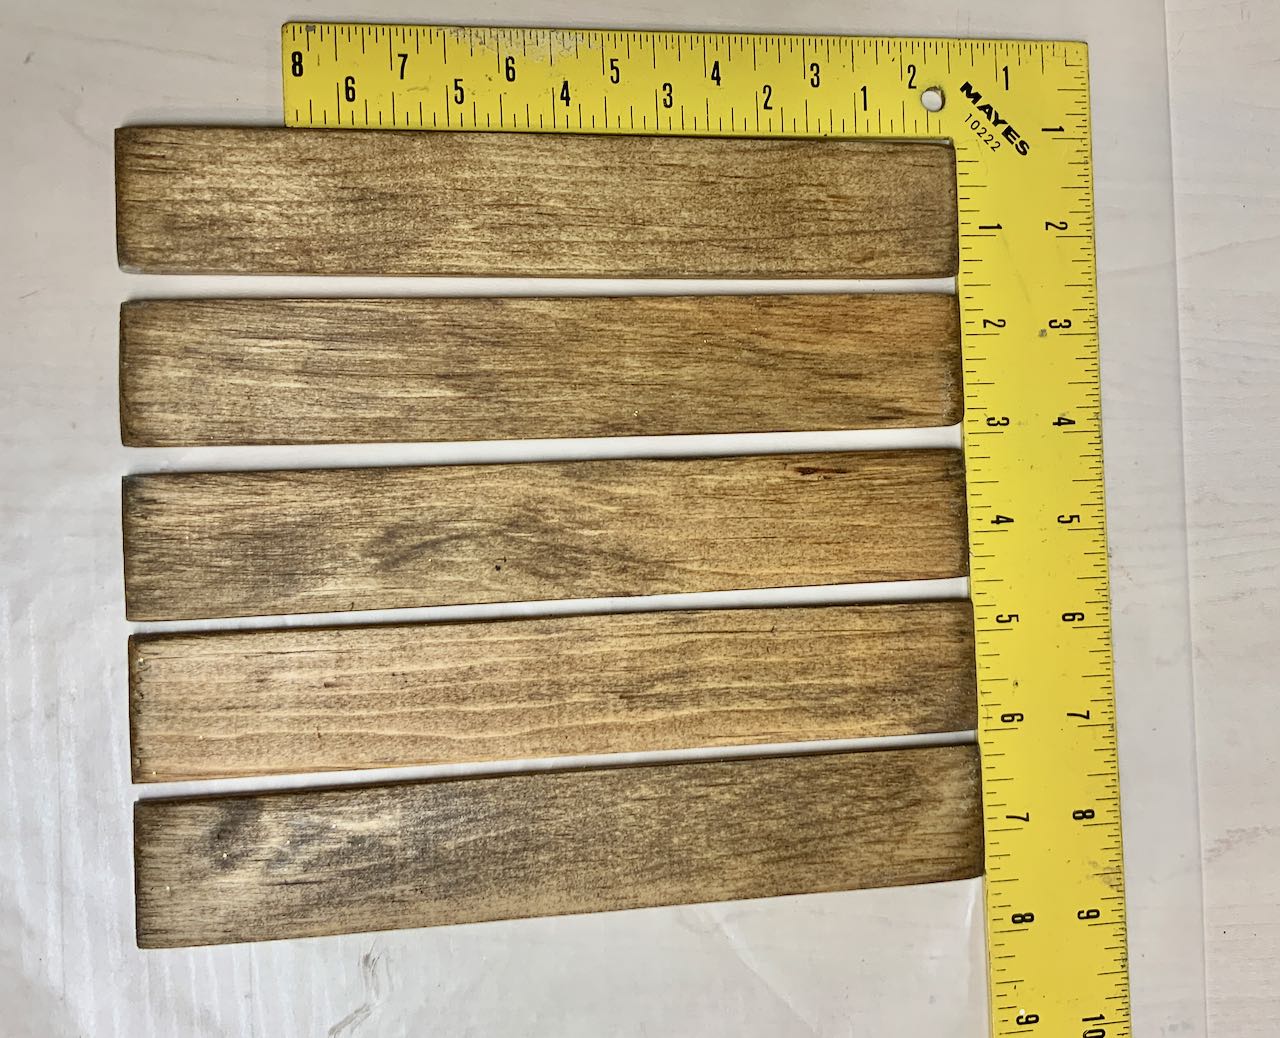 5 slats lined up inside a carpenters square